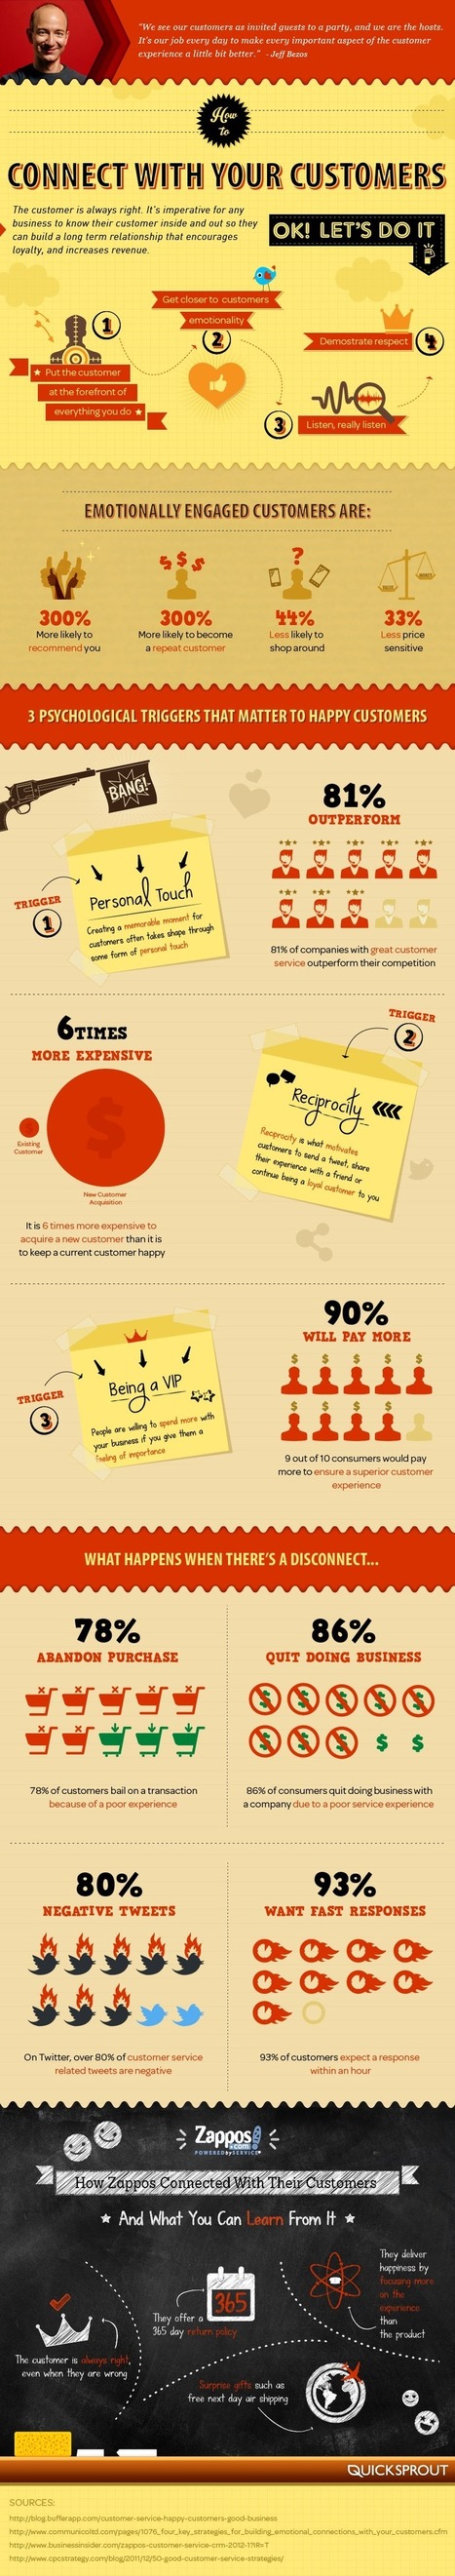 Cómo conectar con tus clientes #infografia #infographic #marketing | Seo, Social Media Marketing | Scoop.it